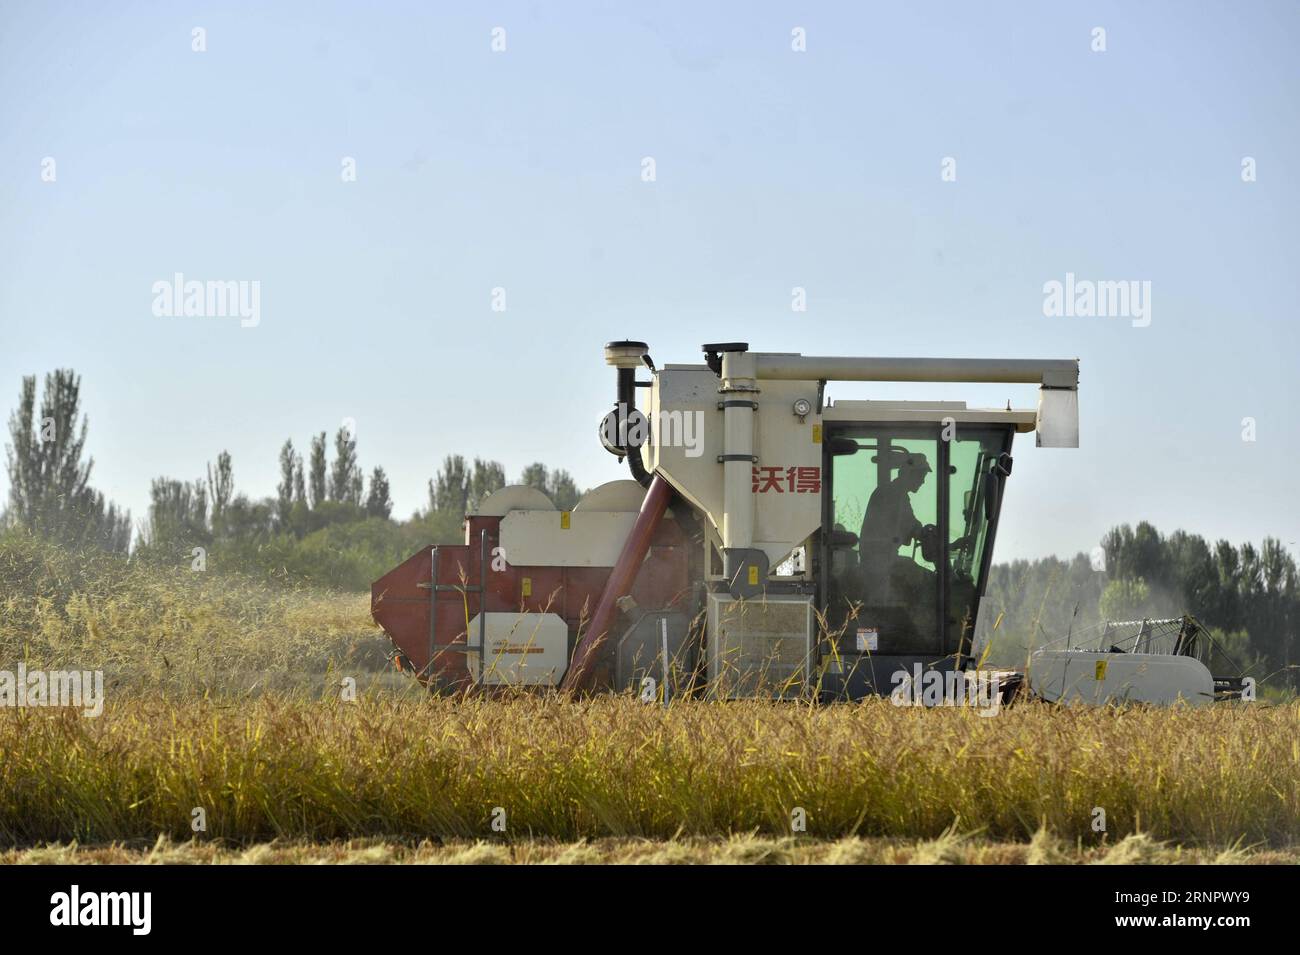 (170909) -- ILI, Sept. 9, 2017 -- A harvester works on an organic rice field in Ili Kazakh Autonomous Prefecture, northwest China s Xinjiang Uygur Autonomous Region, Sept. 8, 2017. ) (wyo) CHINA-XINJIANG-ILI-RICE-HARVEST (CN) HuxHuhu PUBLICATIONxNOTxINxCHN Stock Photo